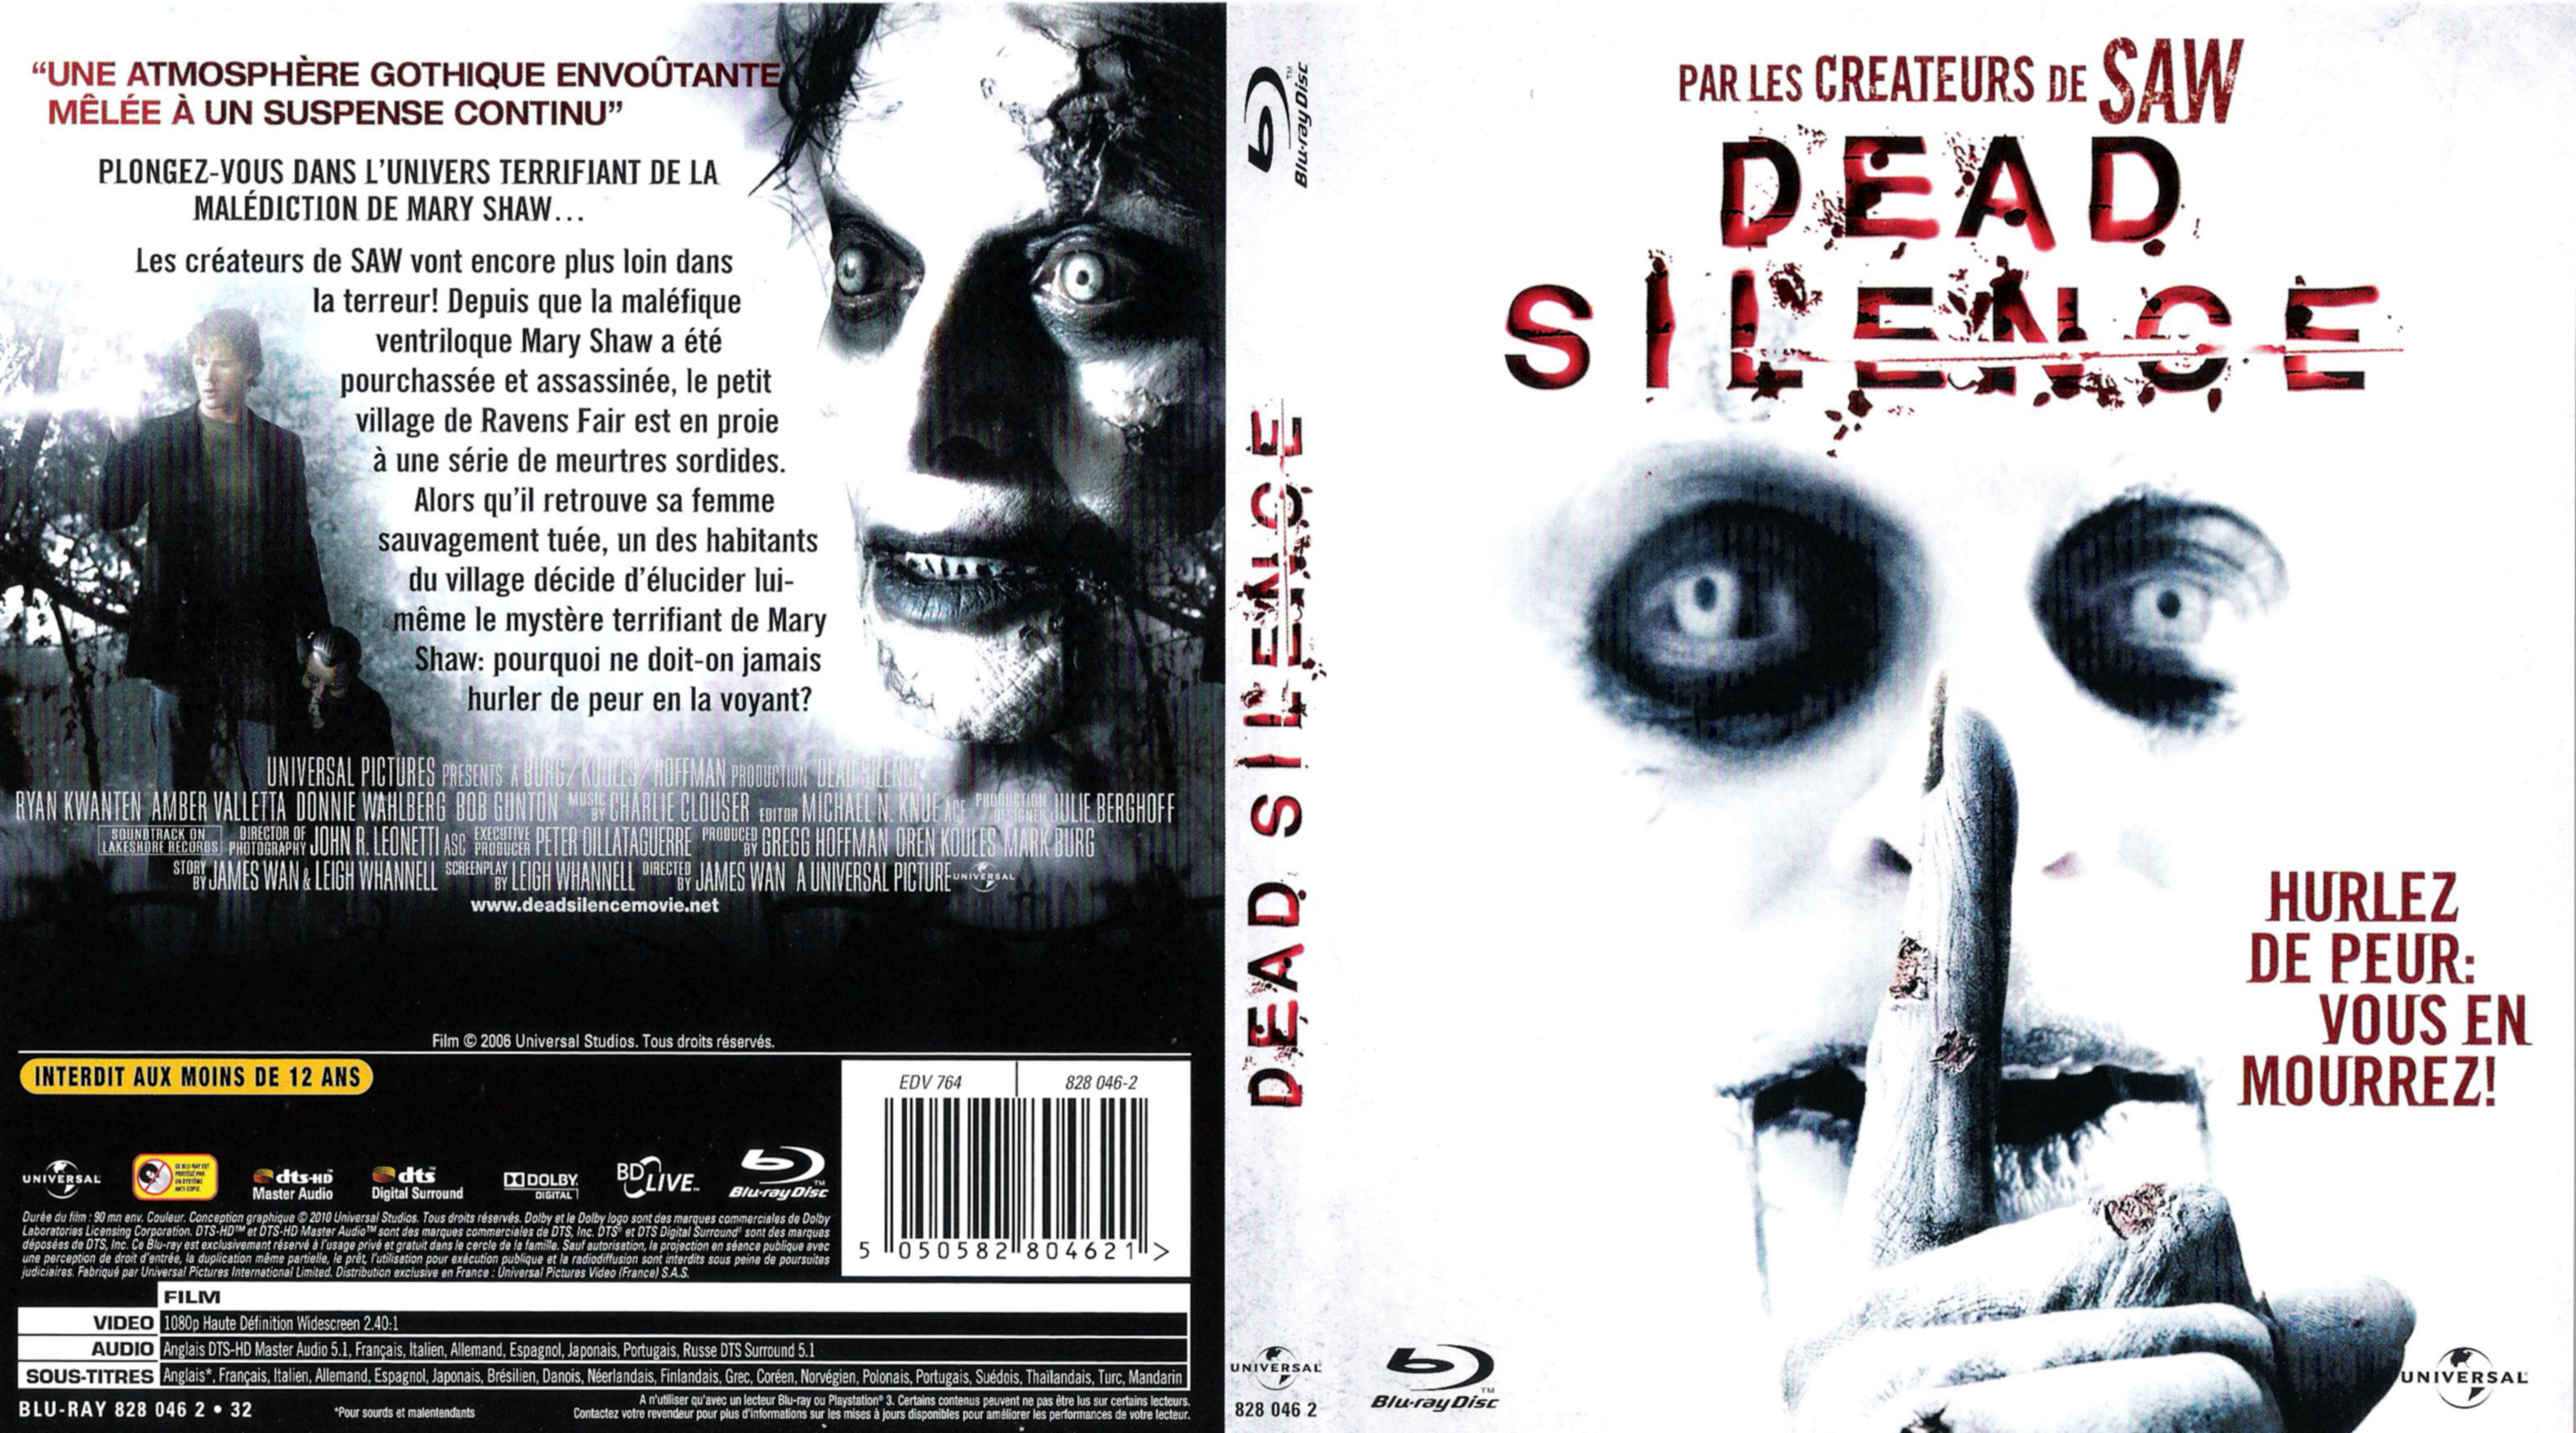 Jaquette DVD Dead silence (BLU-RAY)